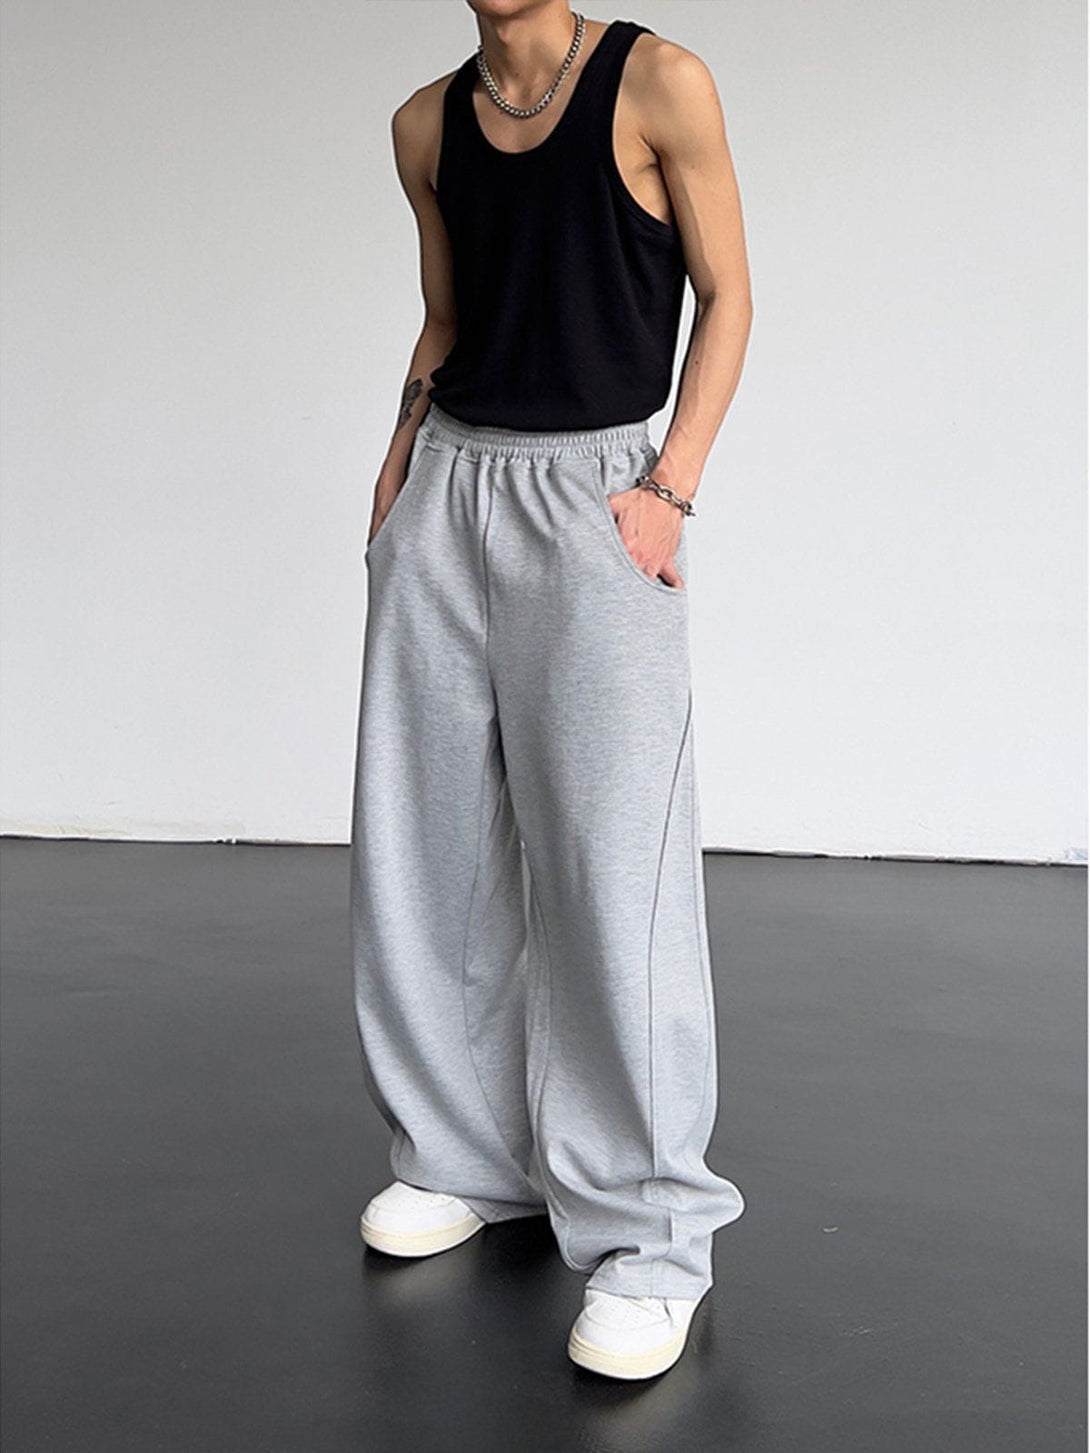 Majesda® - Loose High Waist Pants outfit ideas streetwear fashion